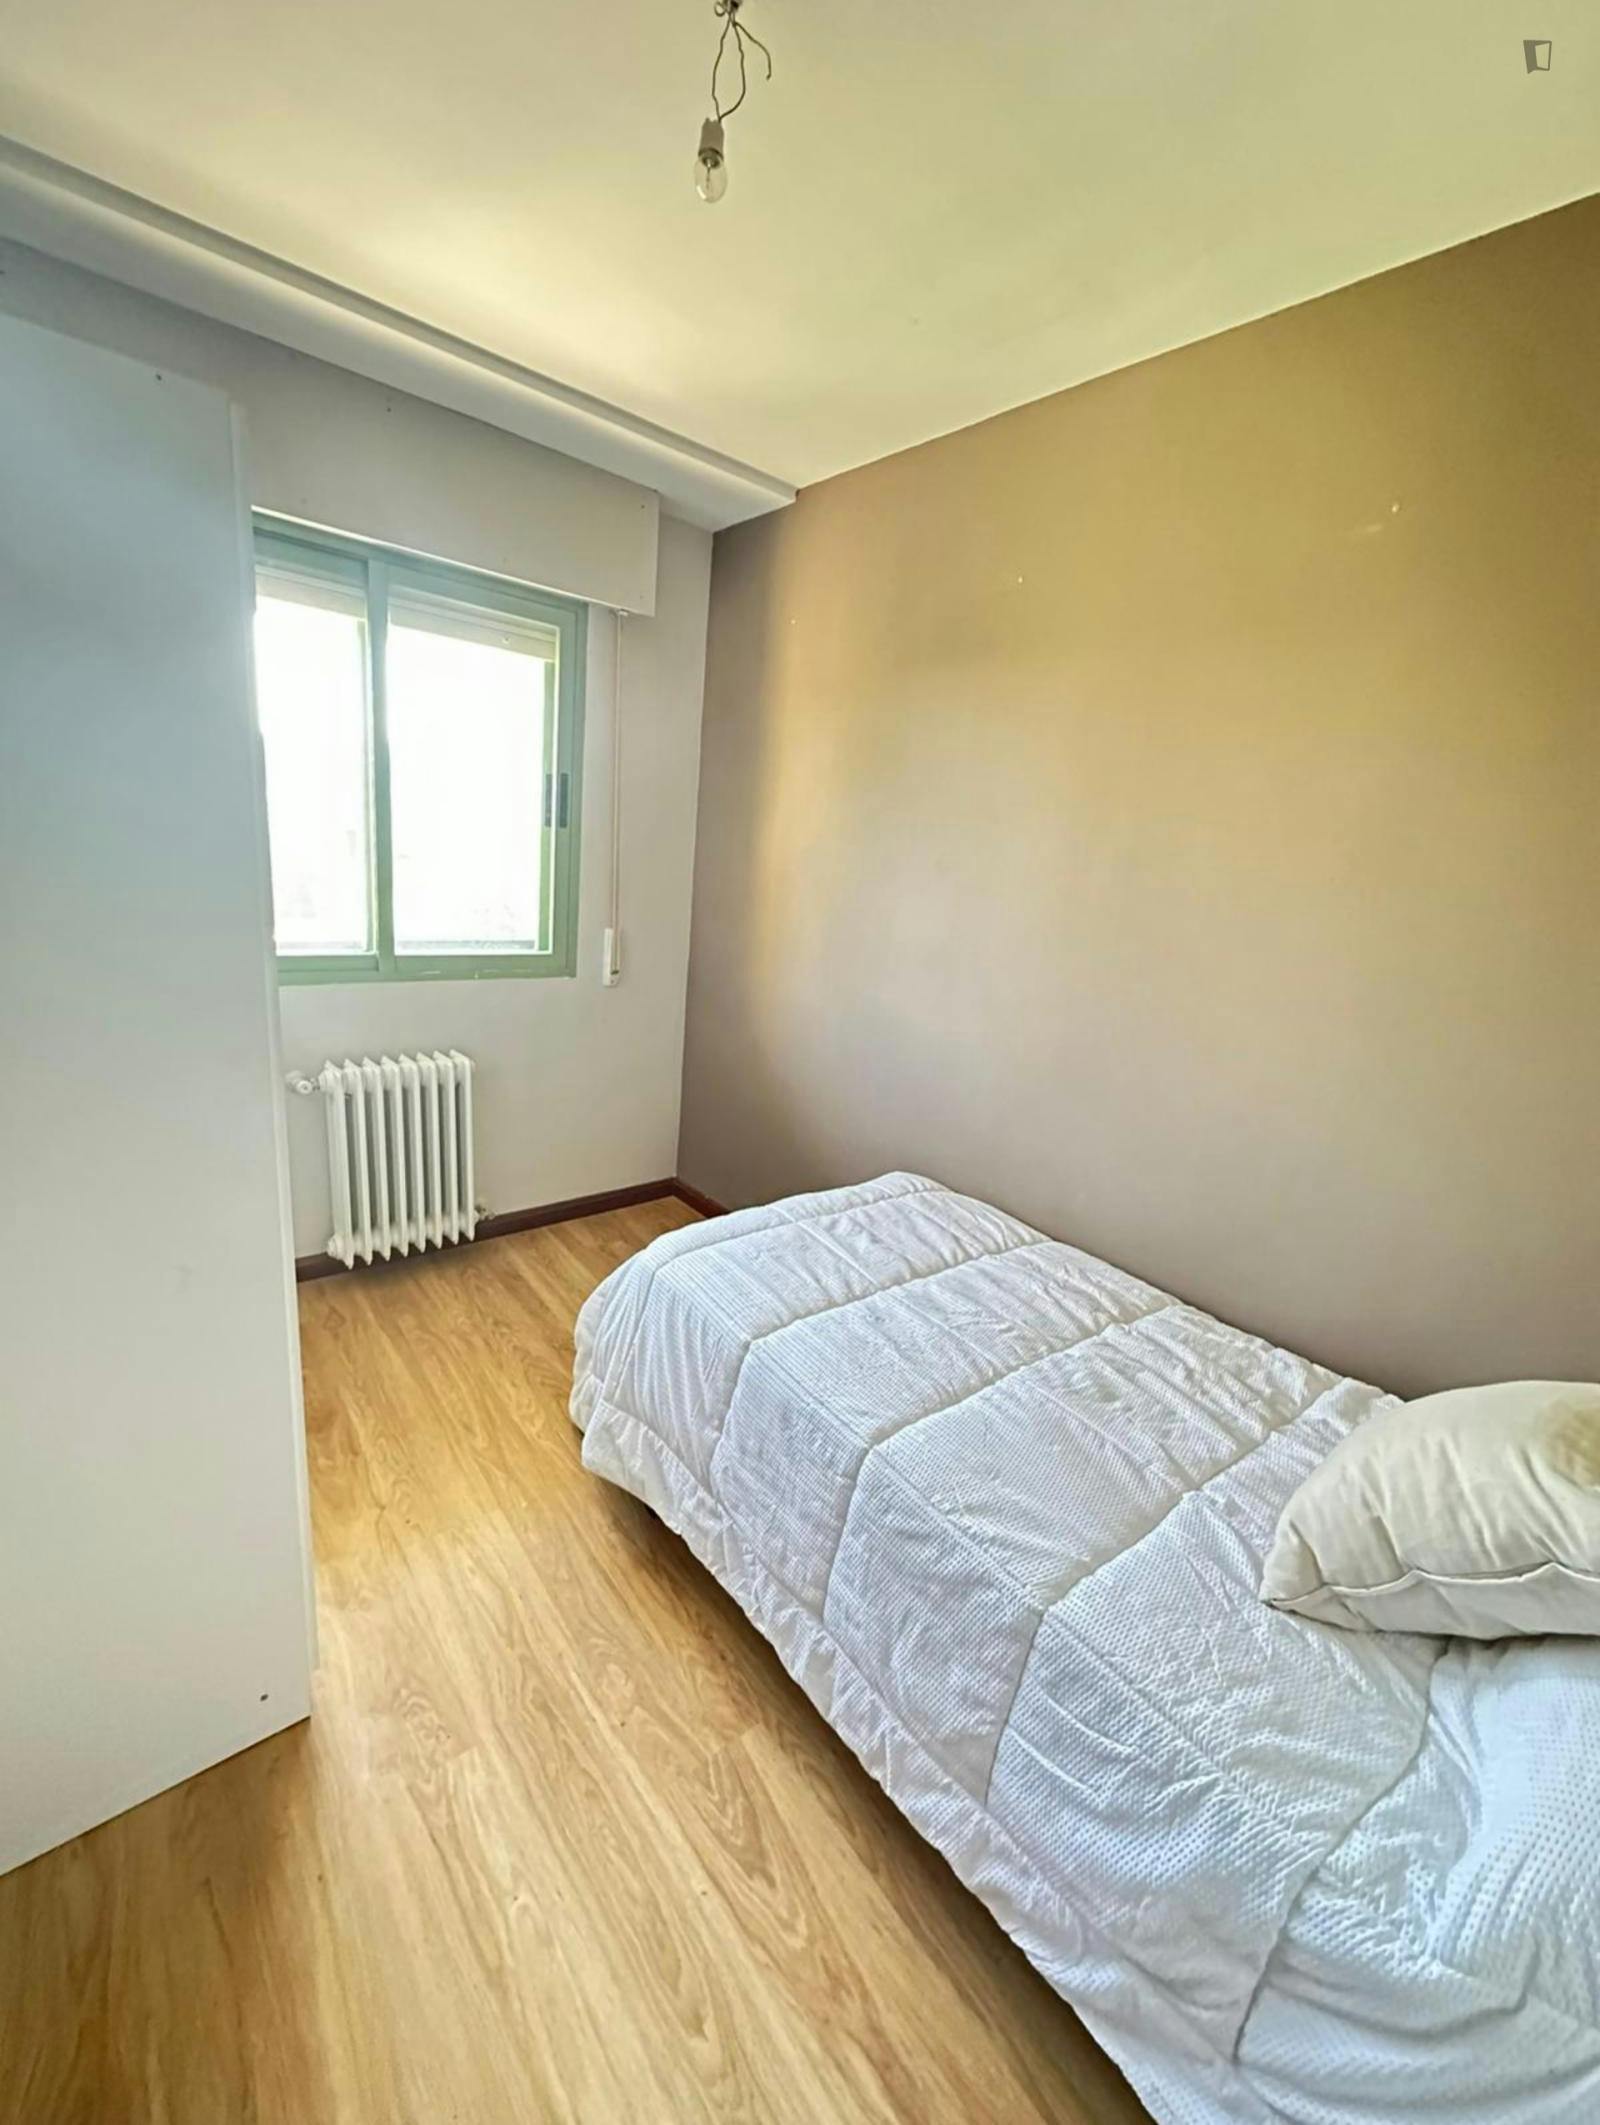 Homely single bedroom in Valladolid next to Valladolid-Universidad train station